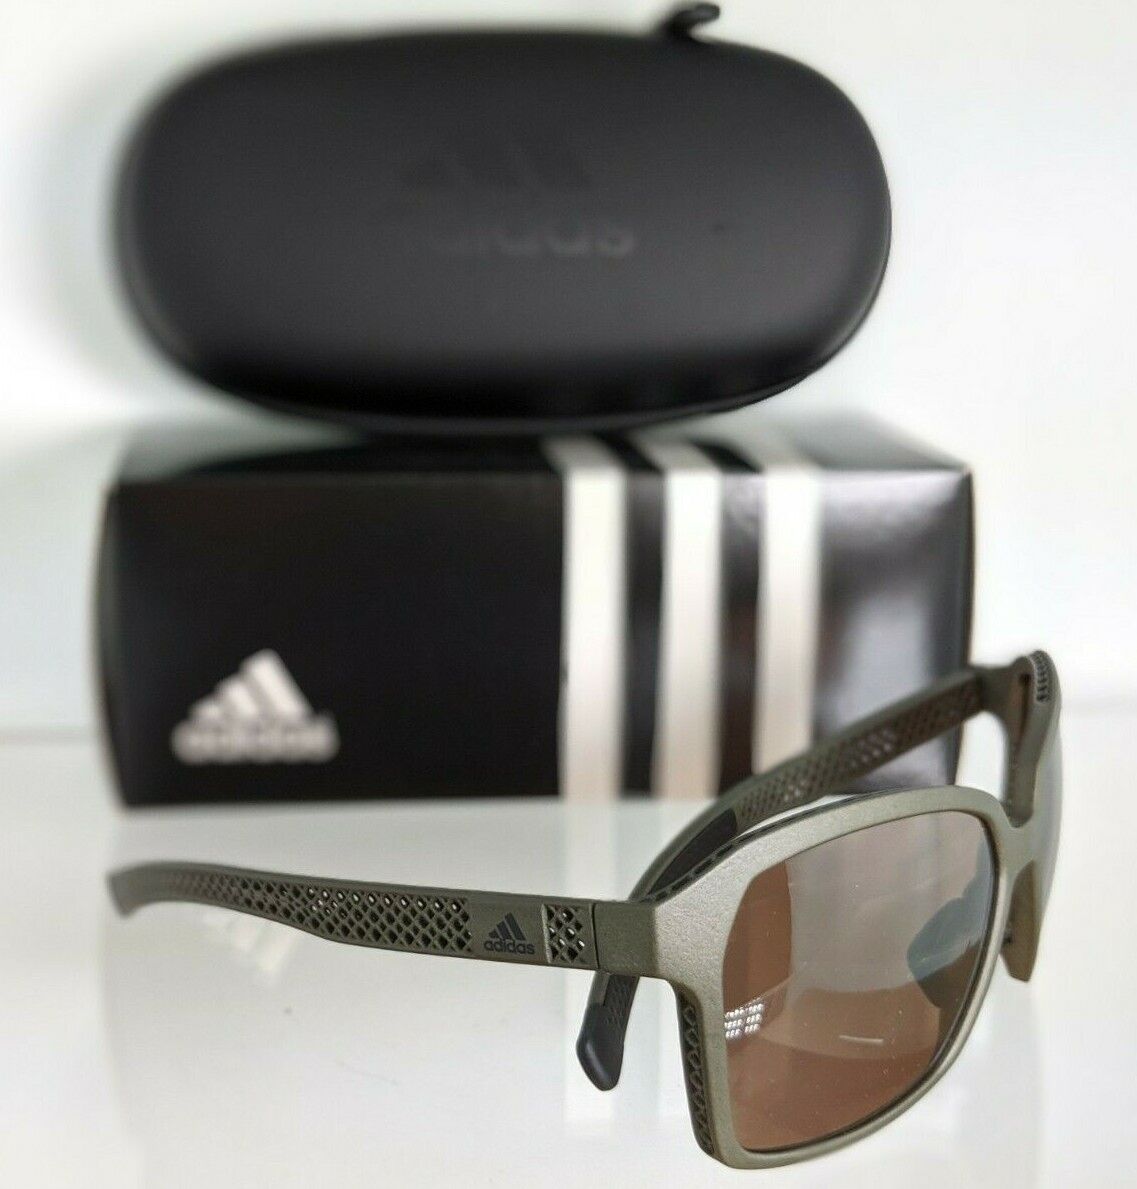 Brand New Authentic Adidas Sunglasses AD 43 75 5500 Aspyr 3D_F AD43